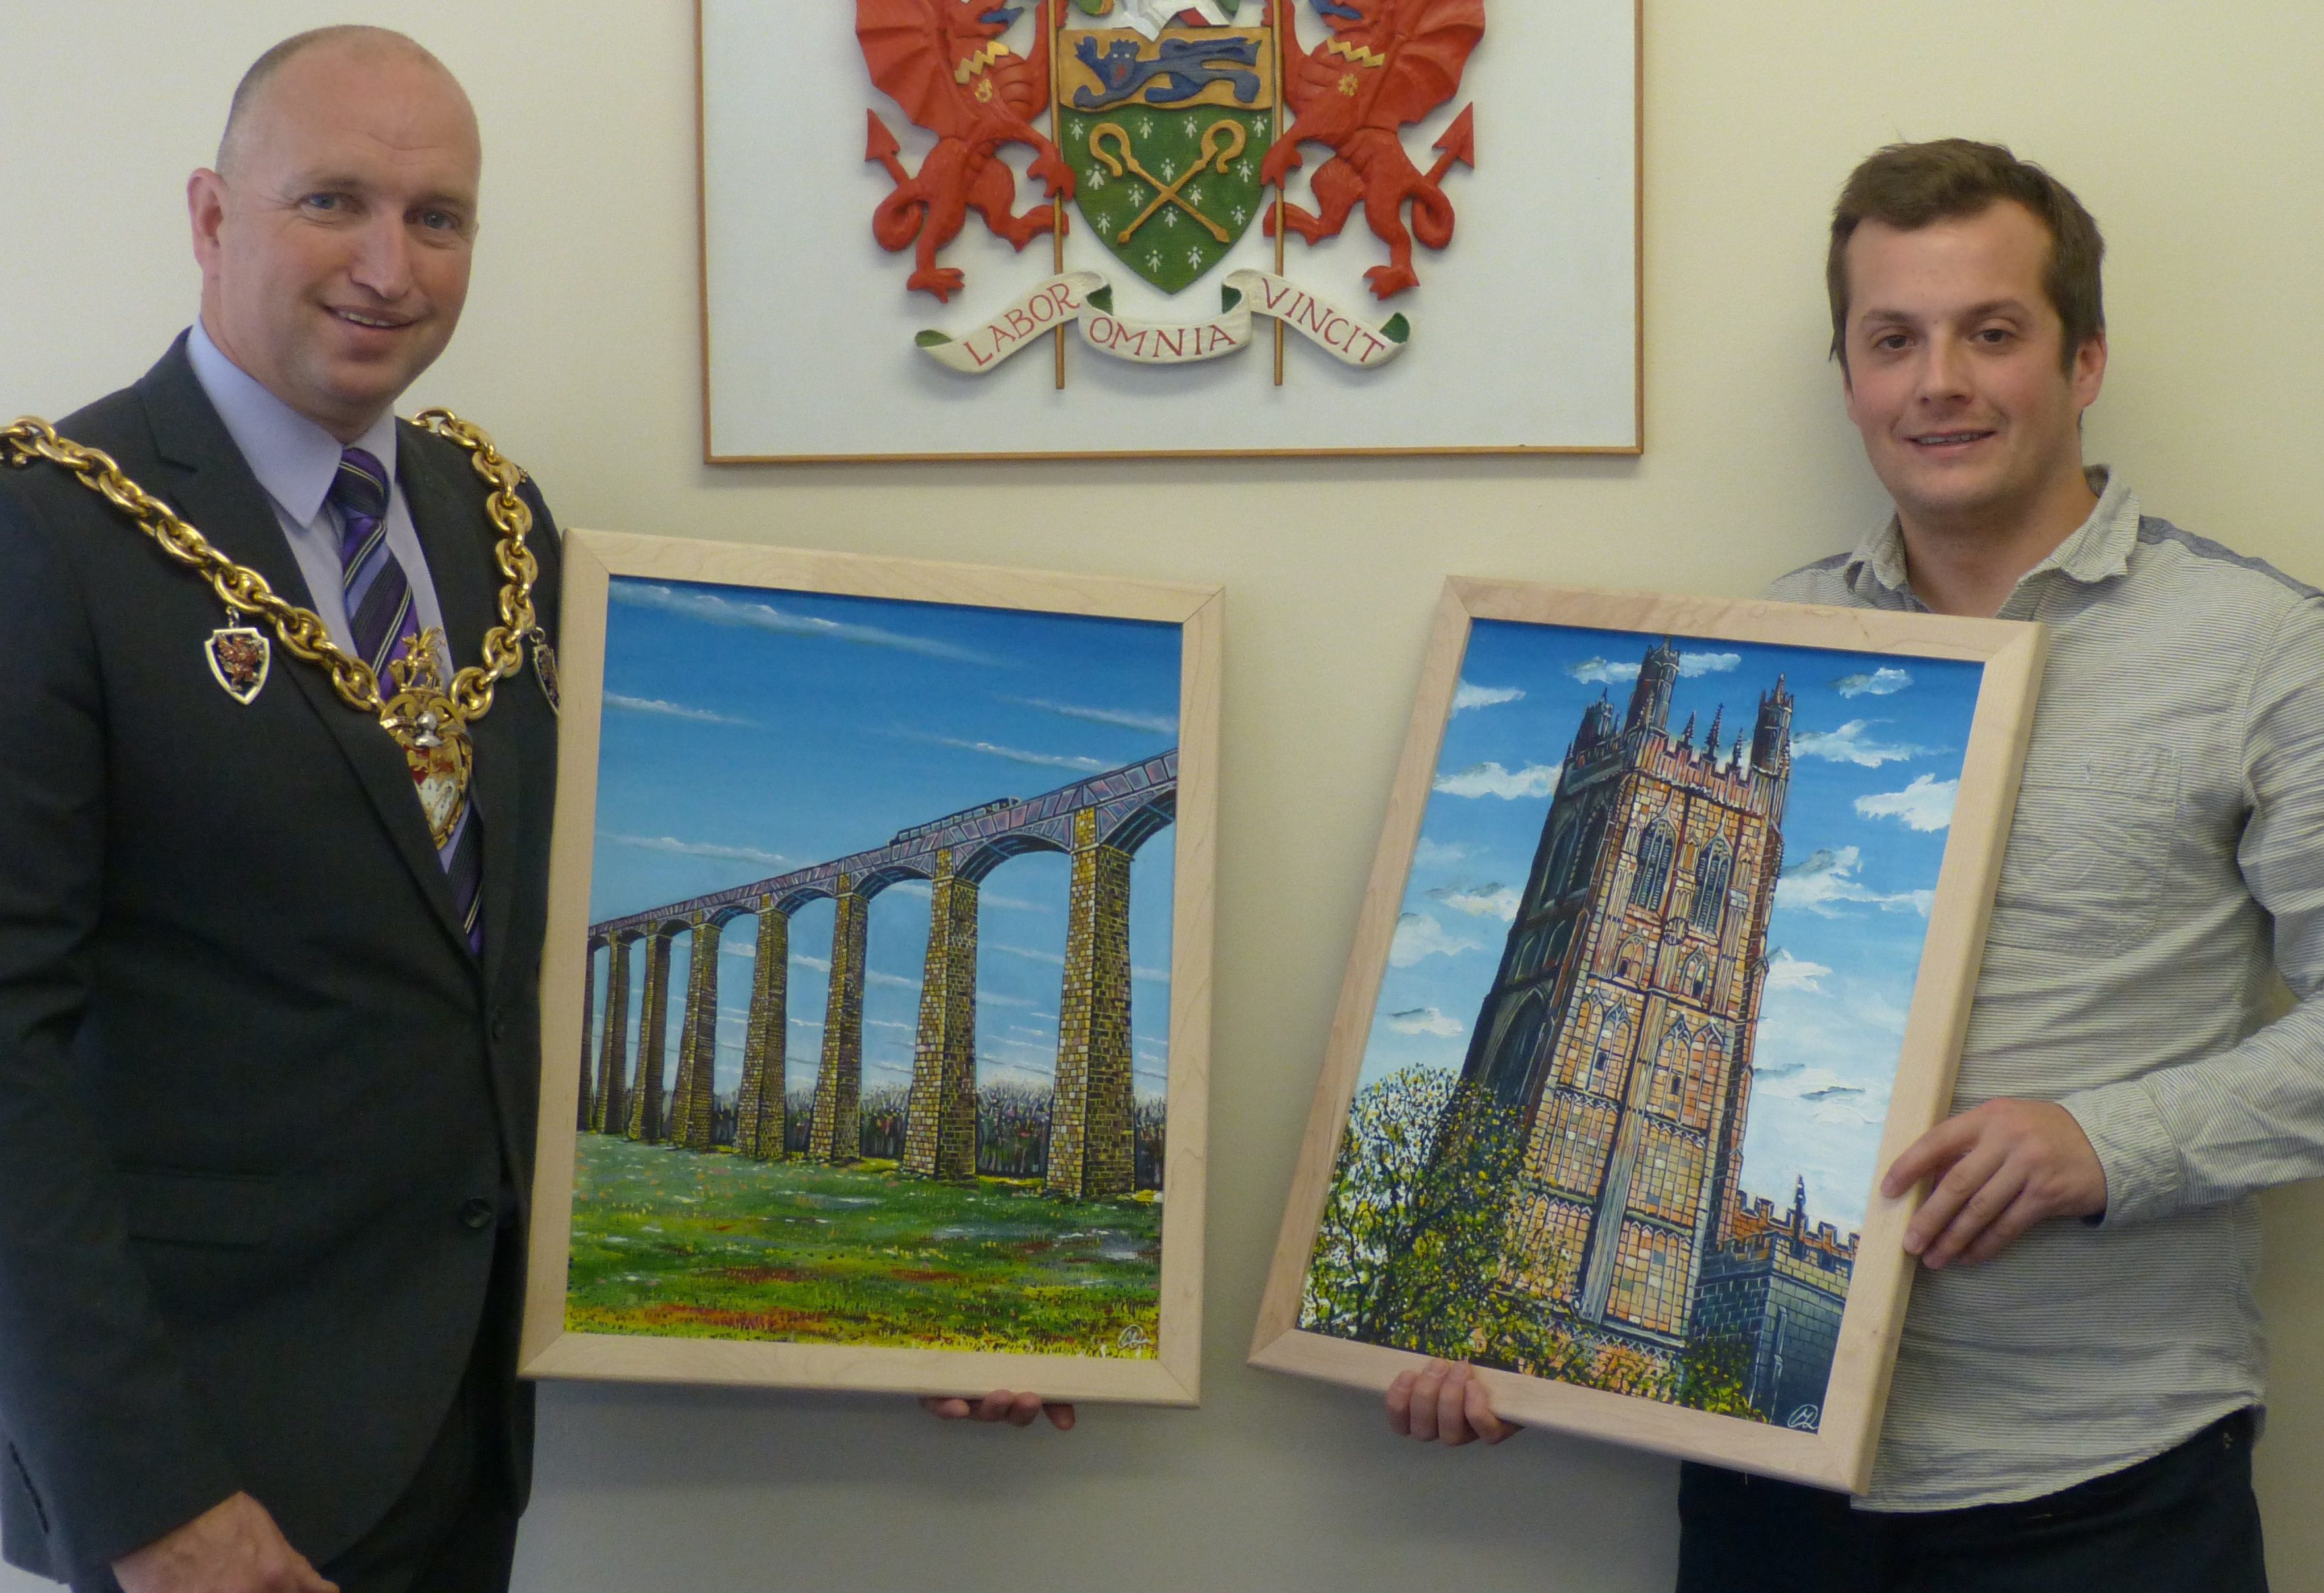 Mayor thanks artist for "fantastic" paintings